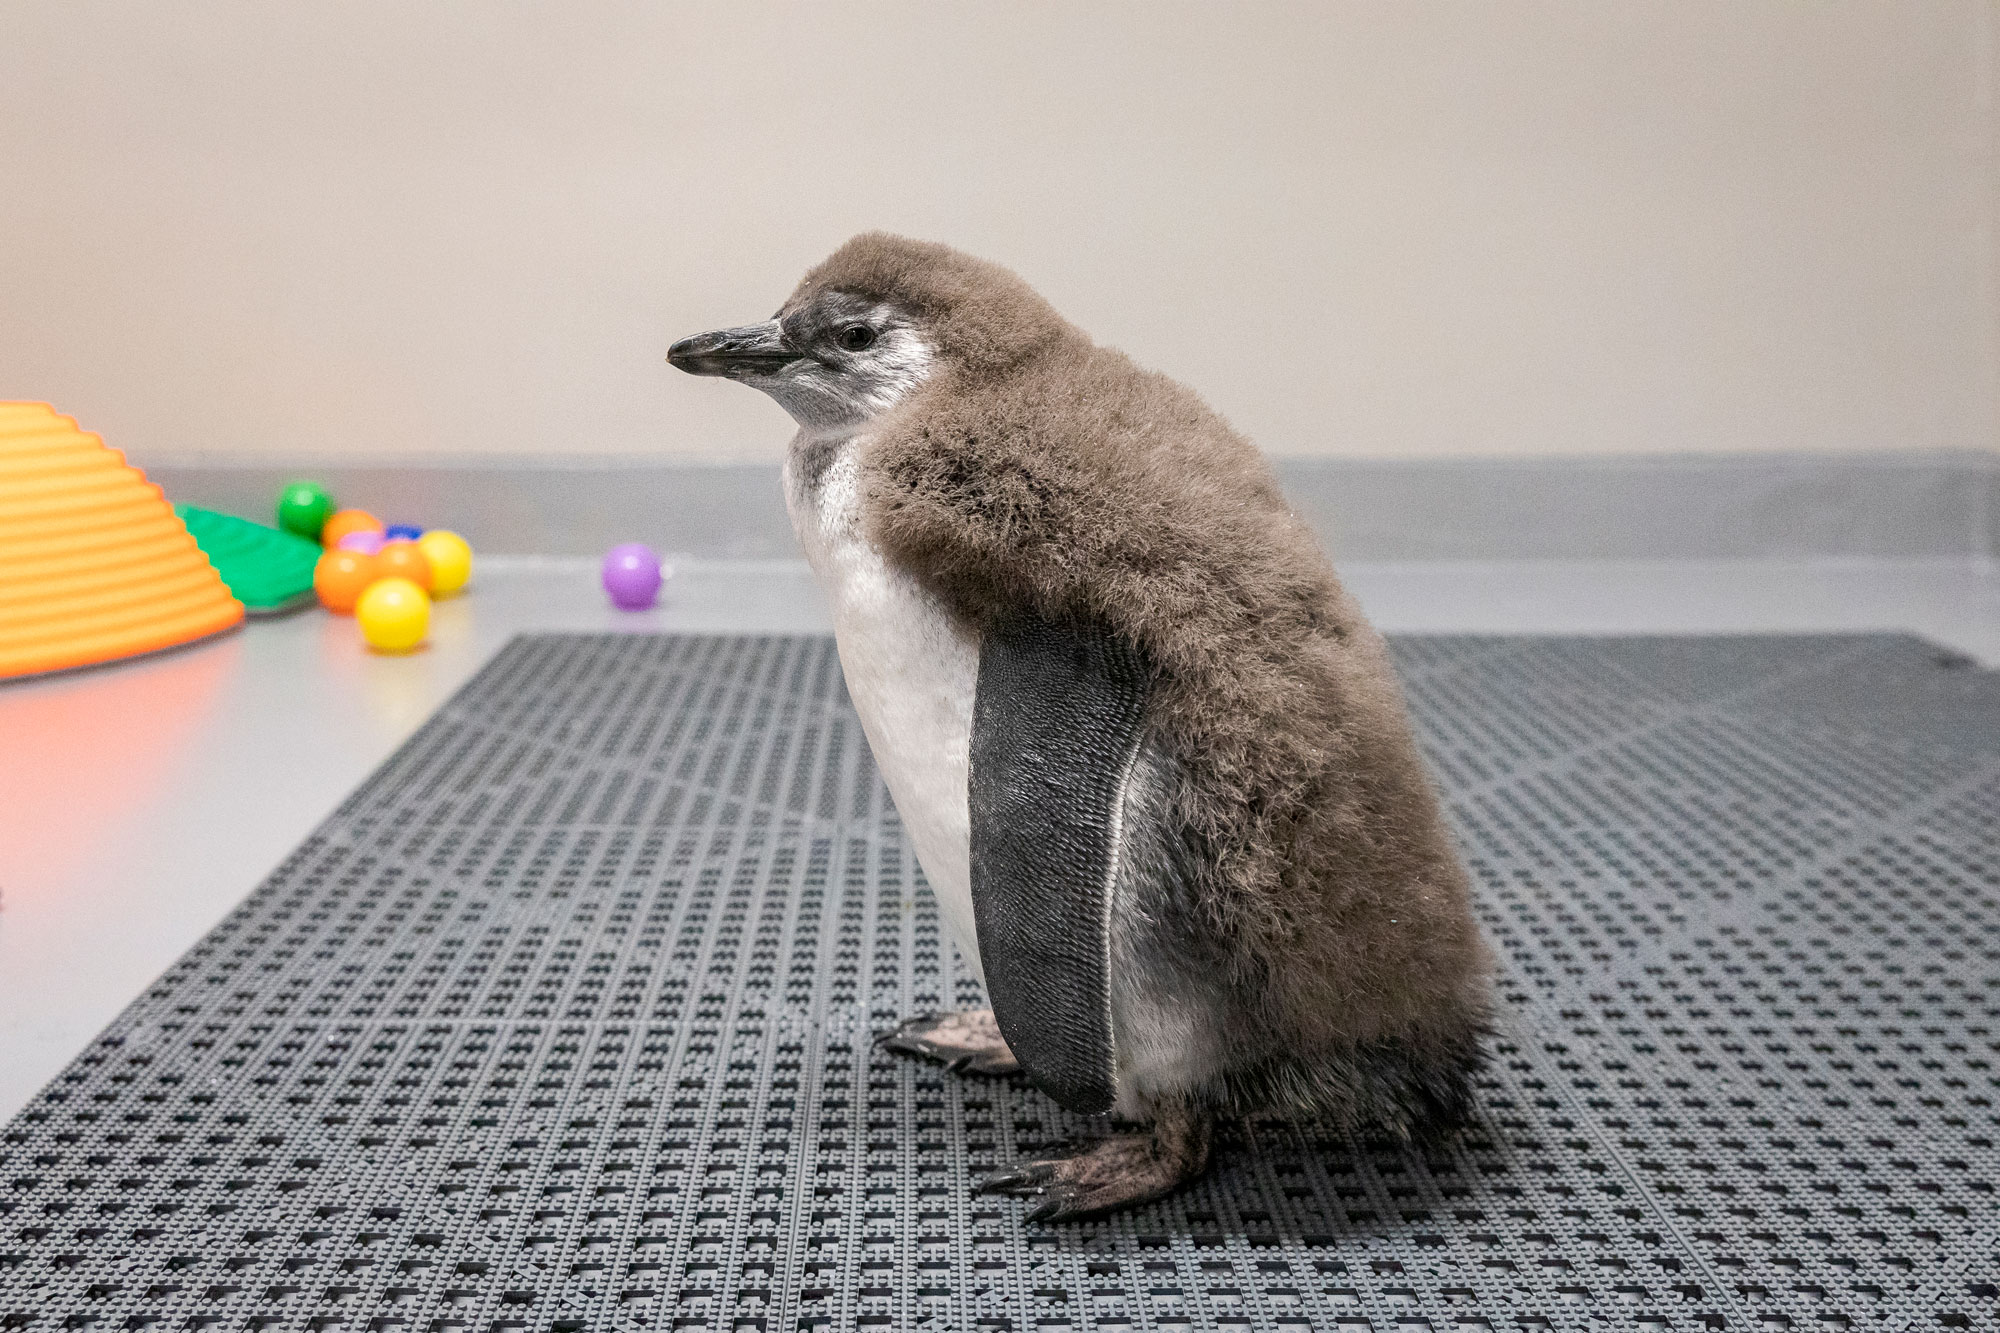 Fluffy penguin chick in school-like environment